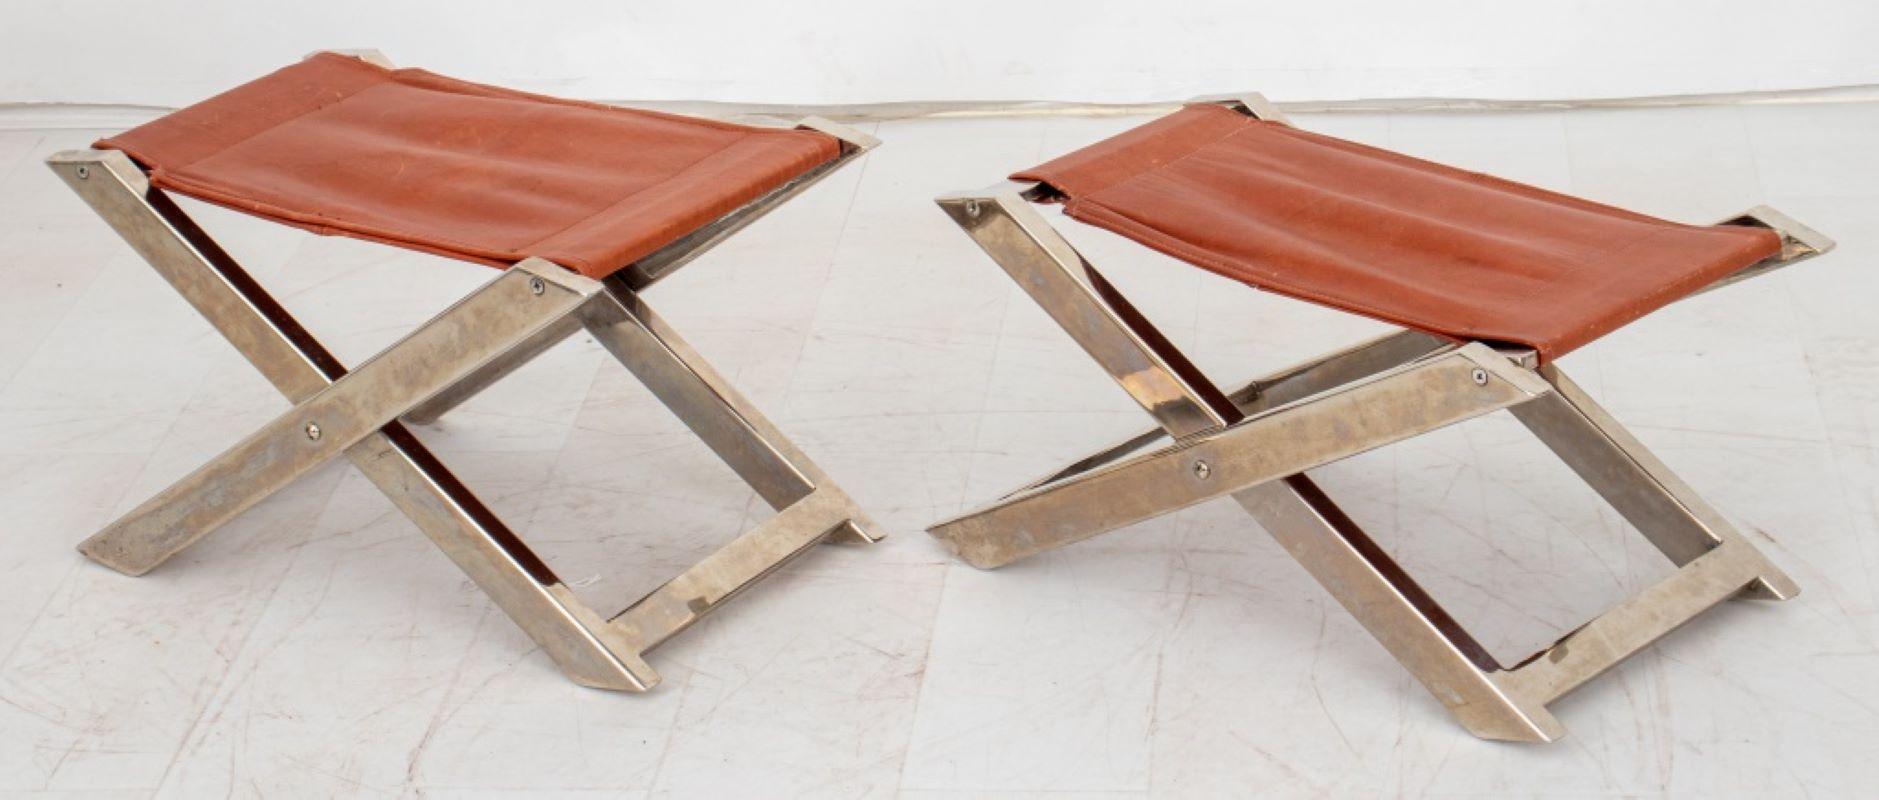 Pair of Charles Hollis Jones (American, b. 1945) manner chrome folding stools with cognac leather seats. 14